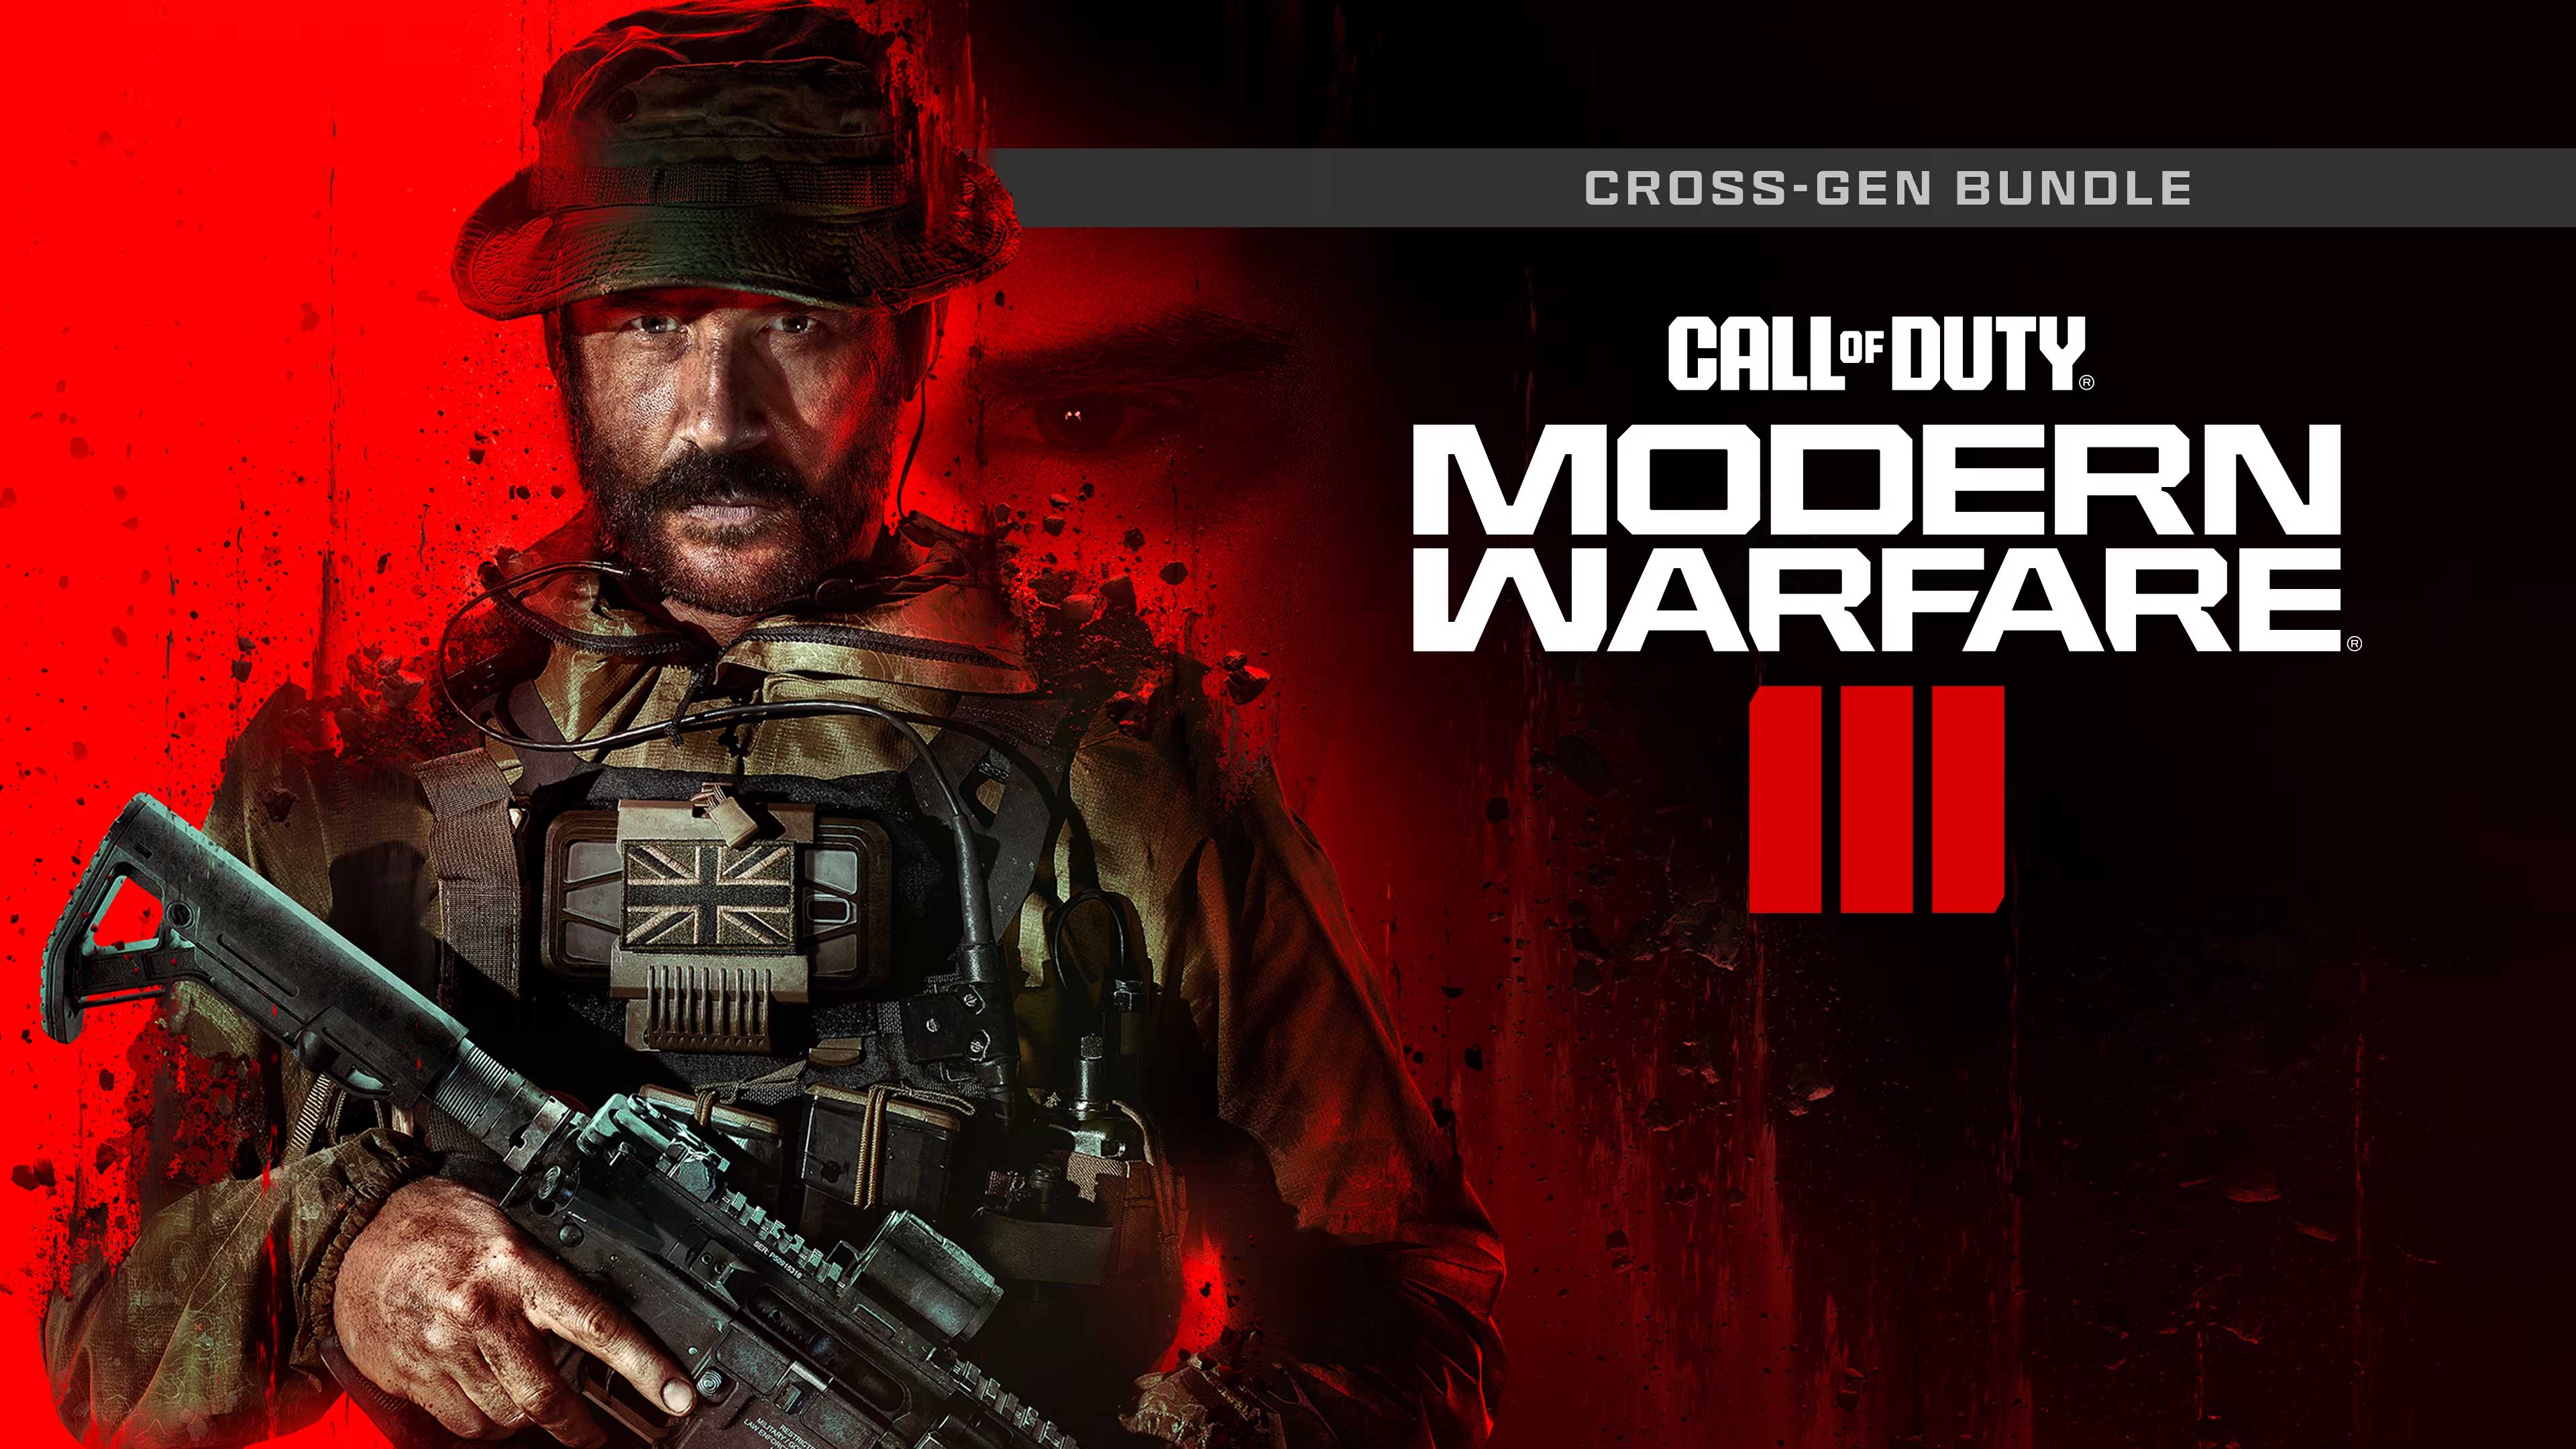 Call of Duty: Modern Warfare III - Cross-Gen Bundle, Gamehattan, gamehattan.com